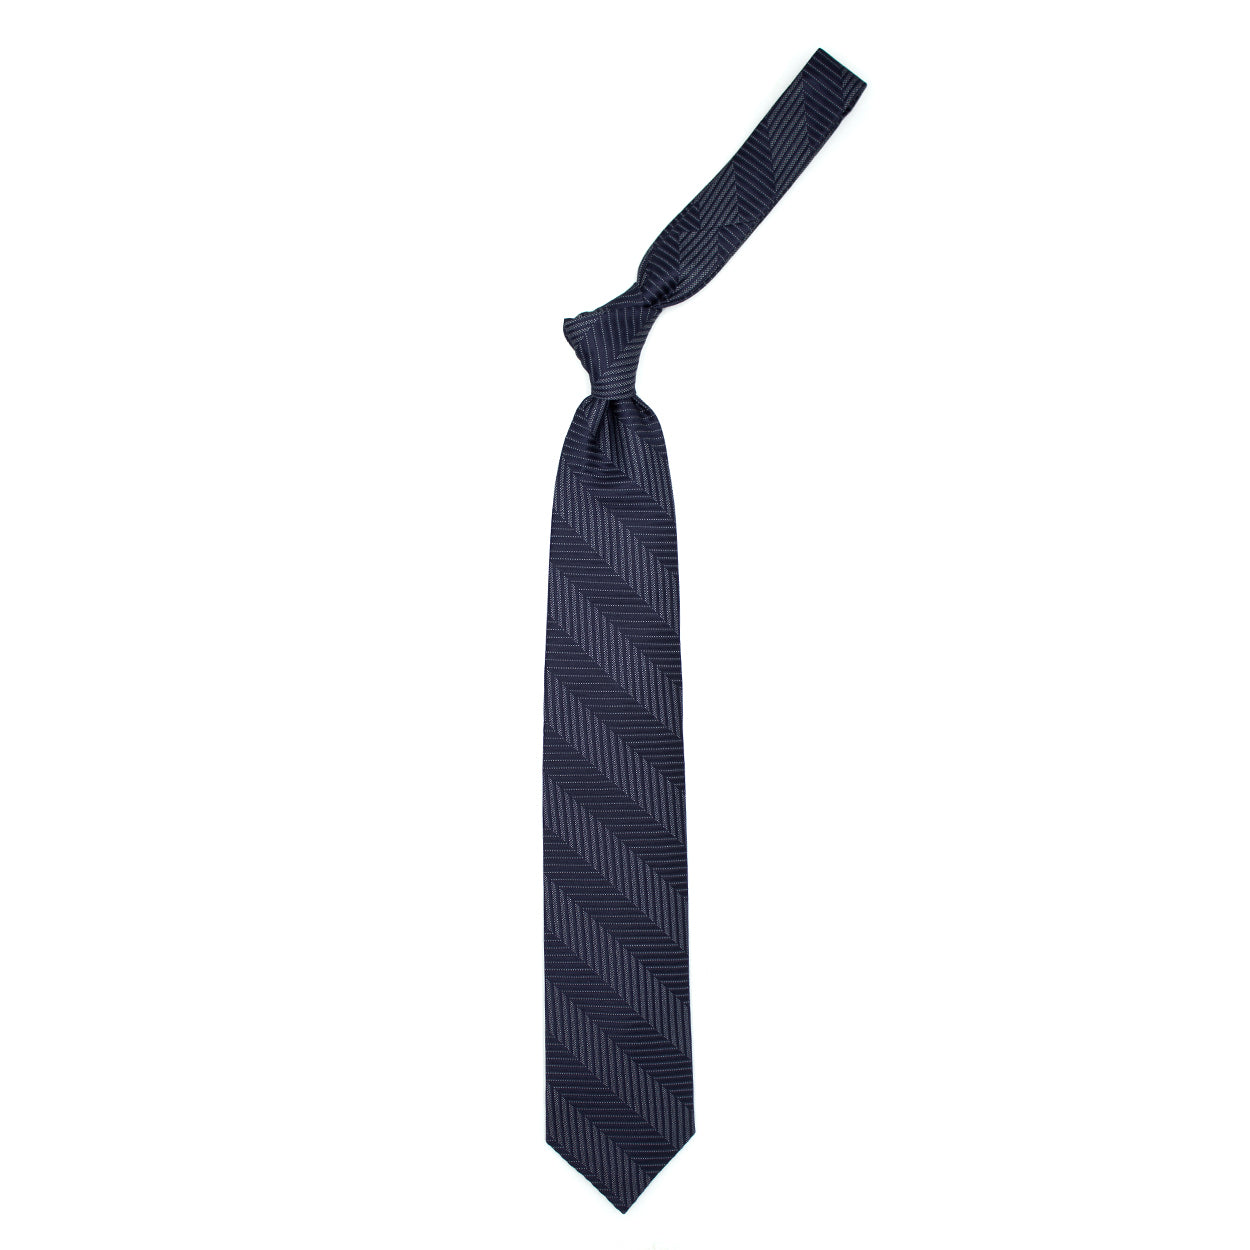 Cravatta blu con righe tramate grigie